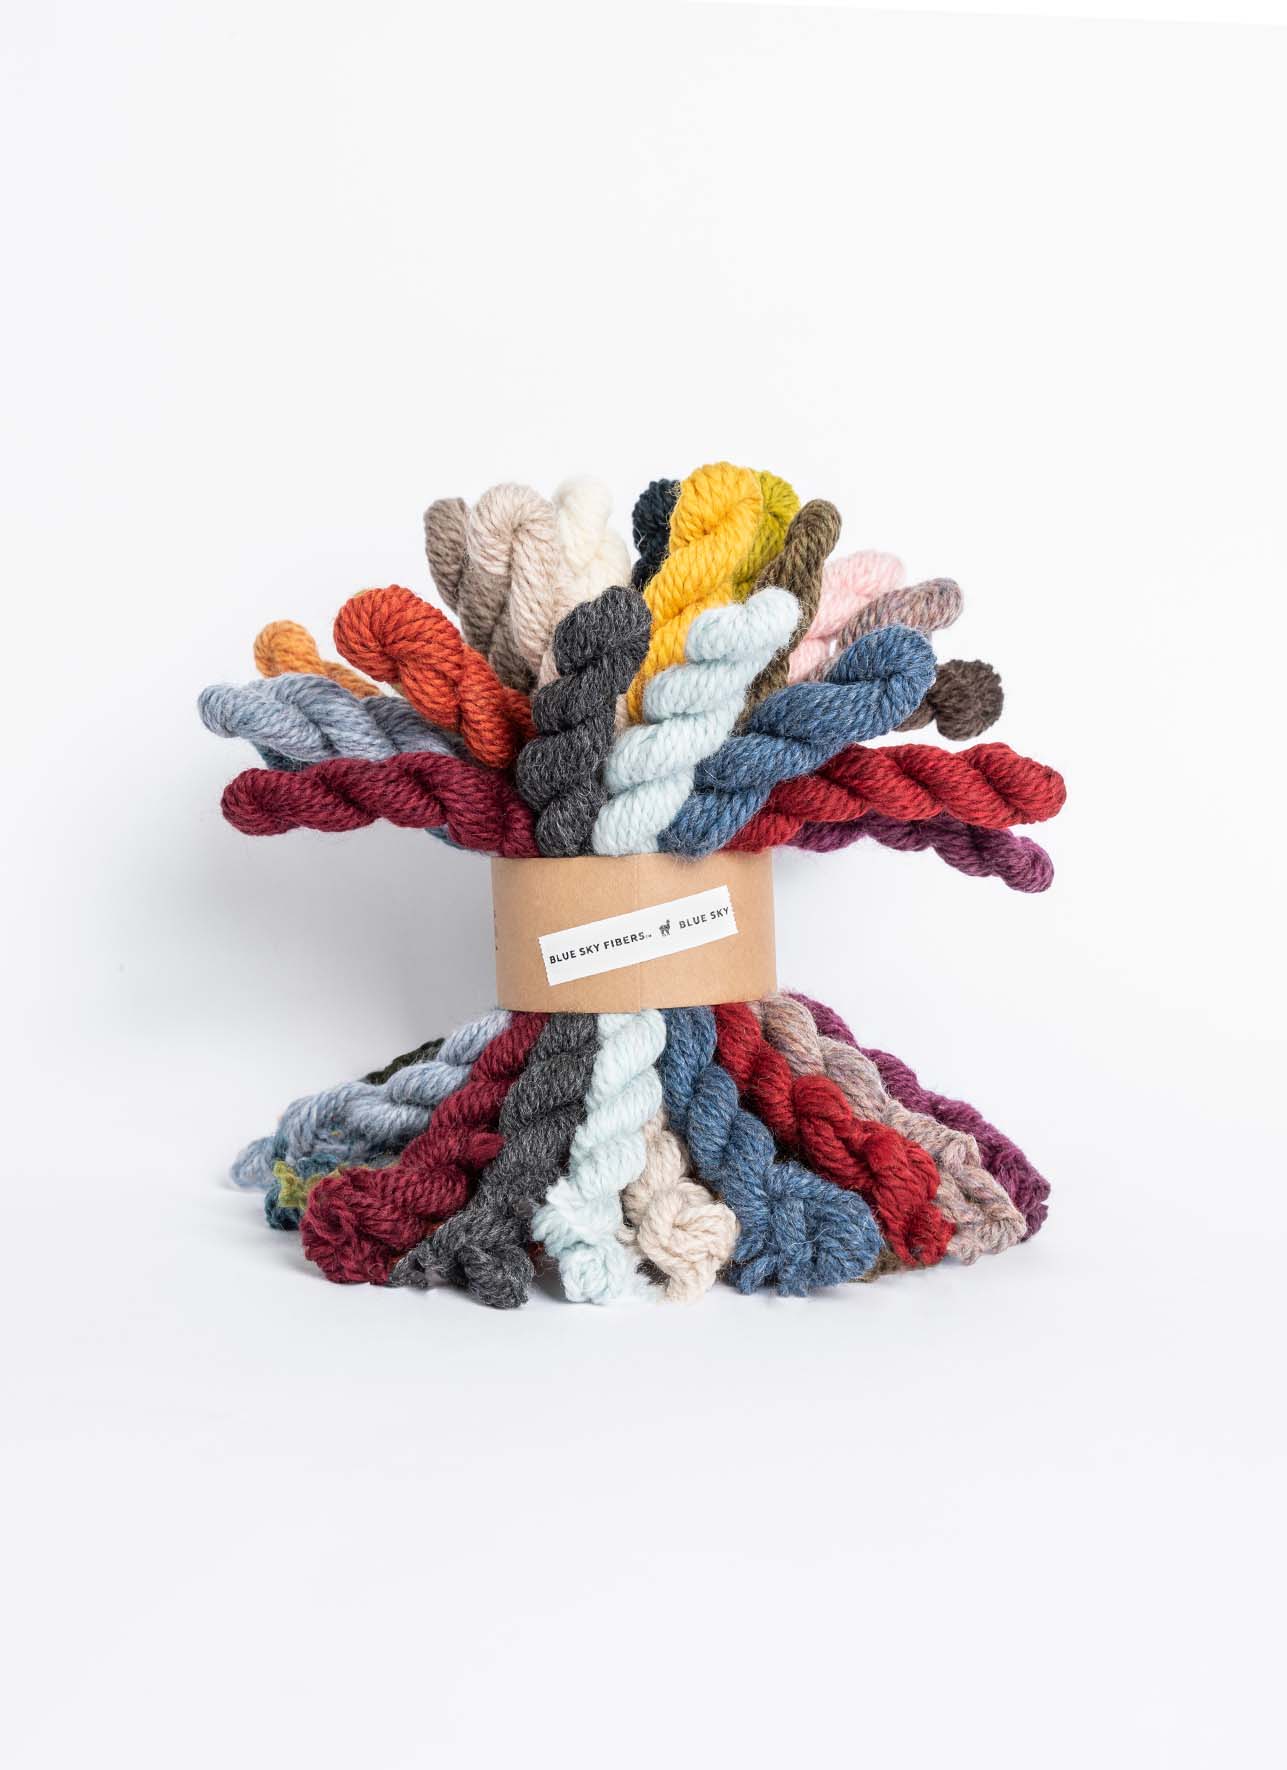 27 Color Woolstok Bundle from Blue Sky Fibers